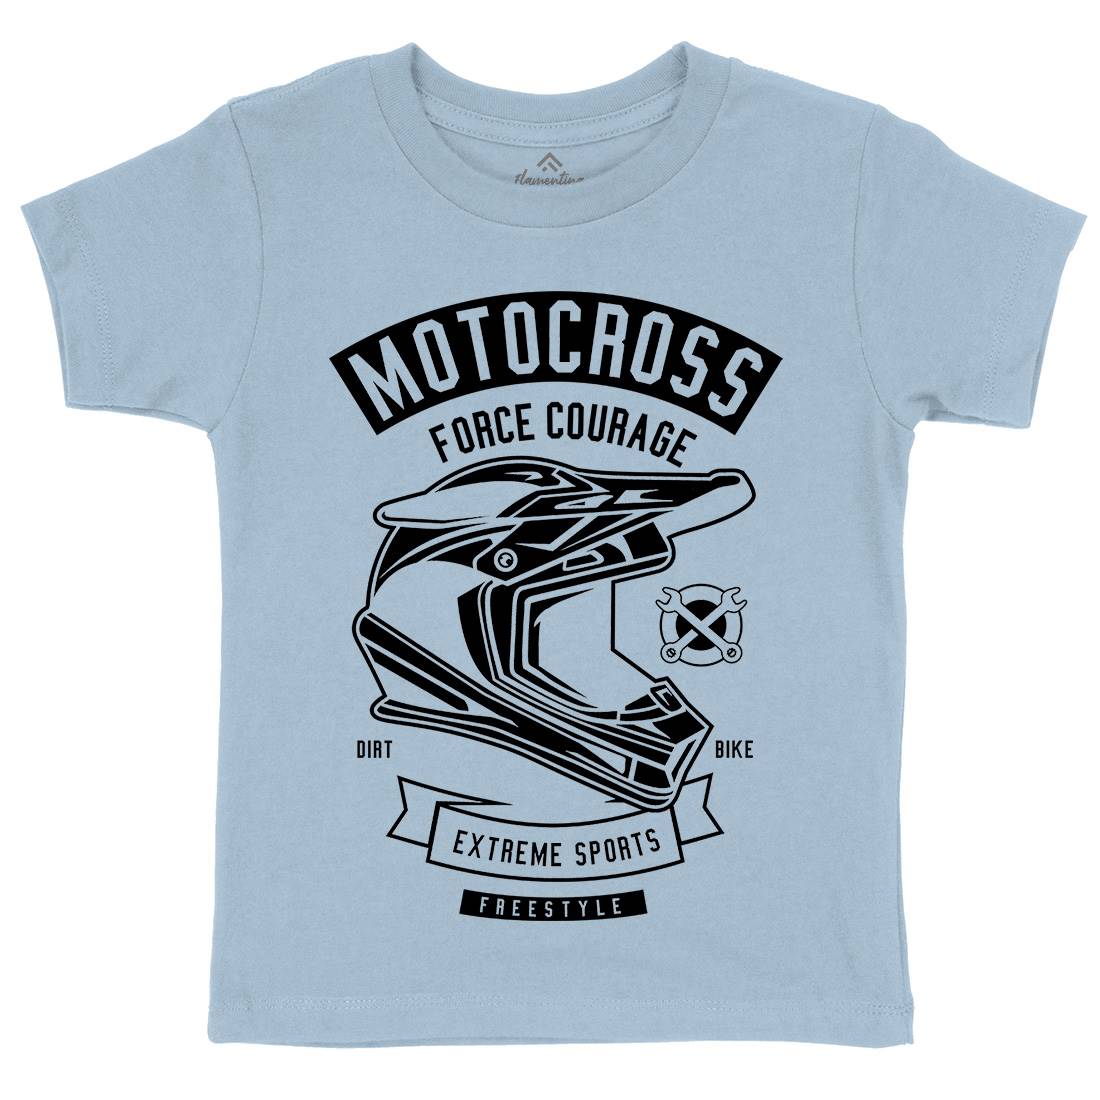 Motocross Force Courage Kids Crew Neck T-Shirt Motorcycles B576